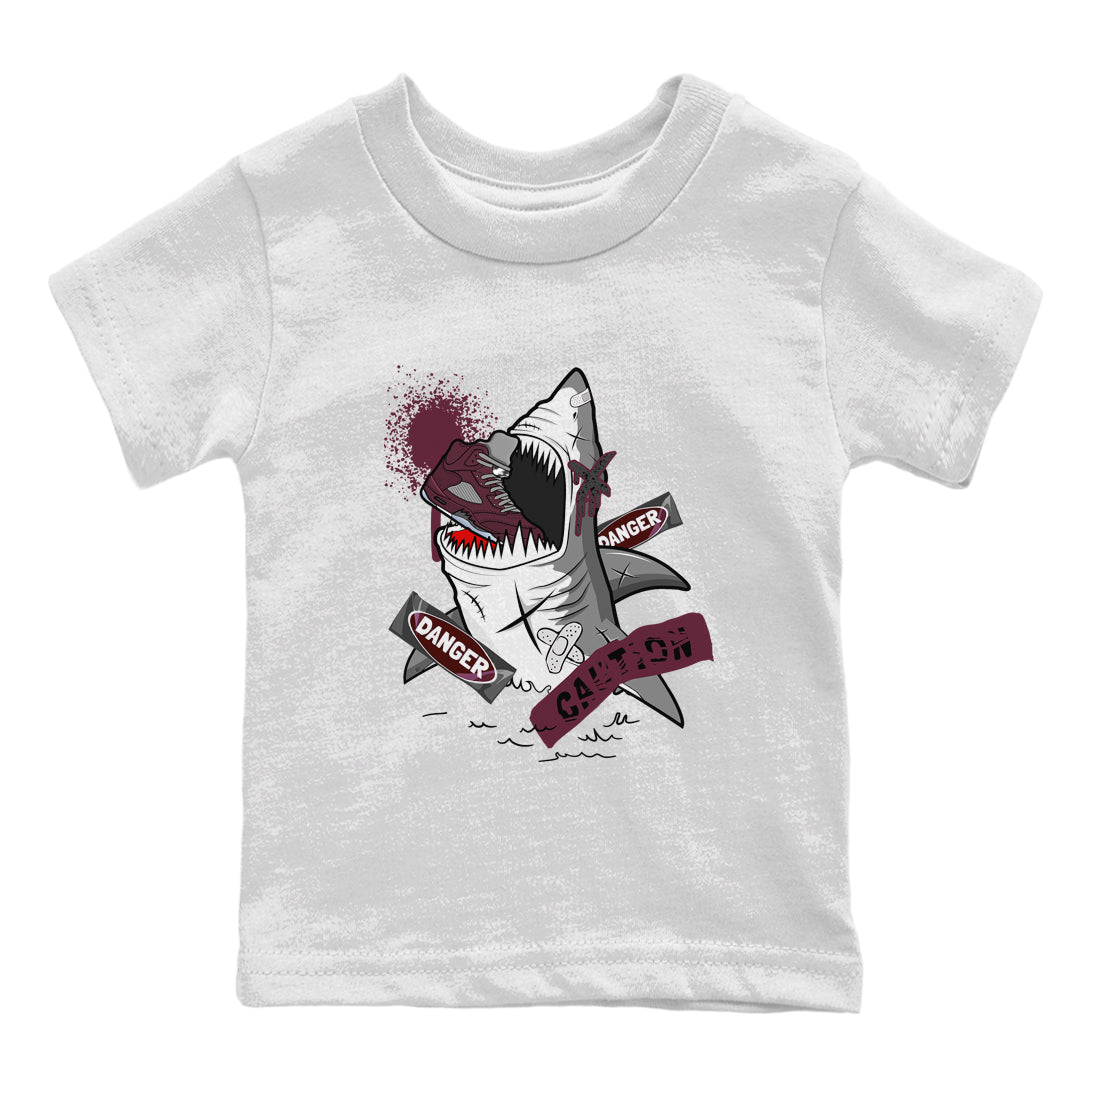 5s Burgundy shirt to match jordans Dangerous Shark Streetwear Sneaker Shirt Air Jordan 5 Burgundy Drip Gear Zone Sneaker Matching Clothing Baby Toddler White 2 T-Shirt